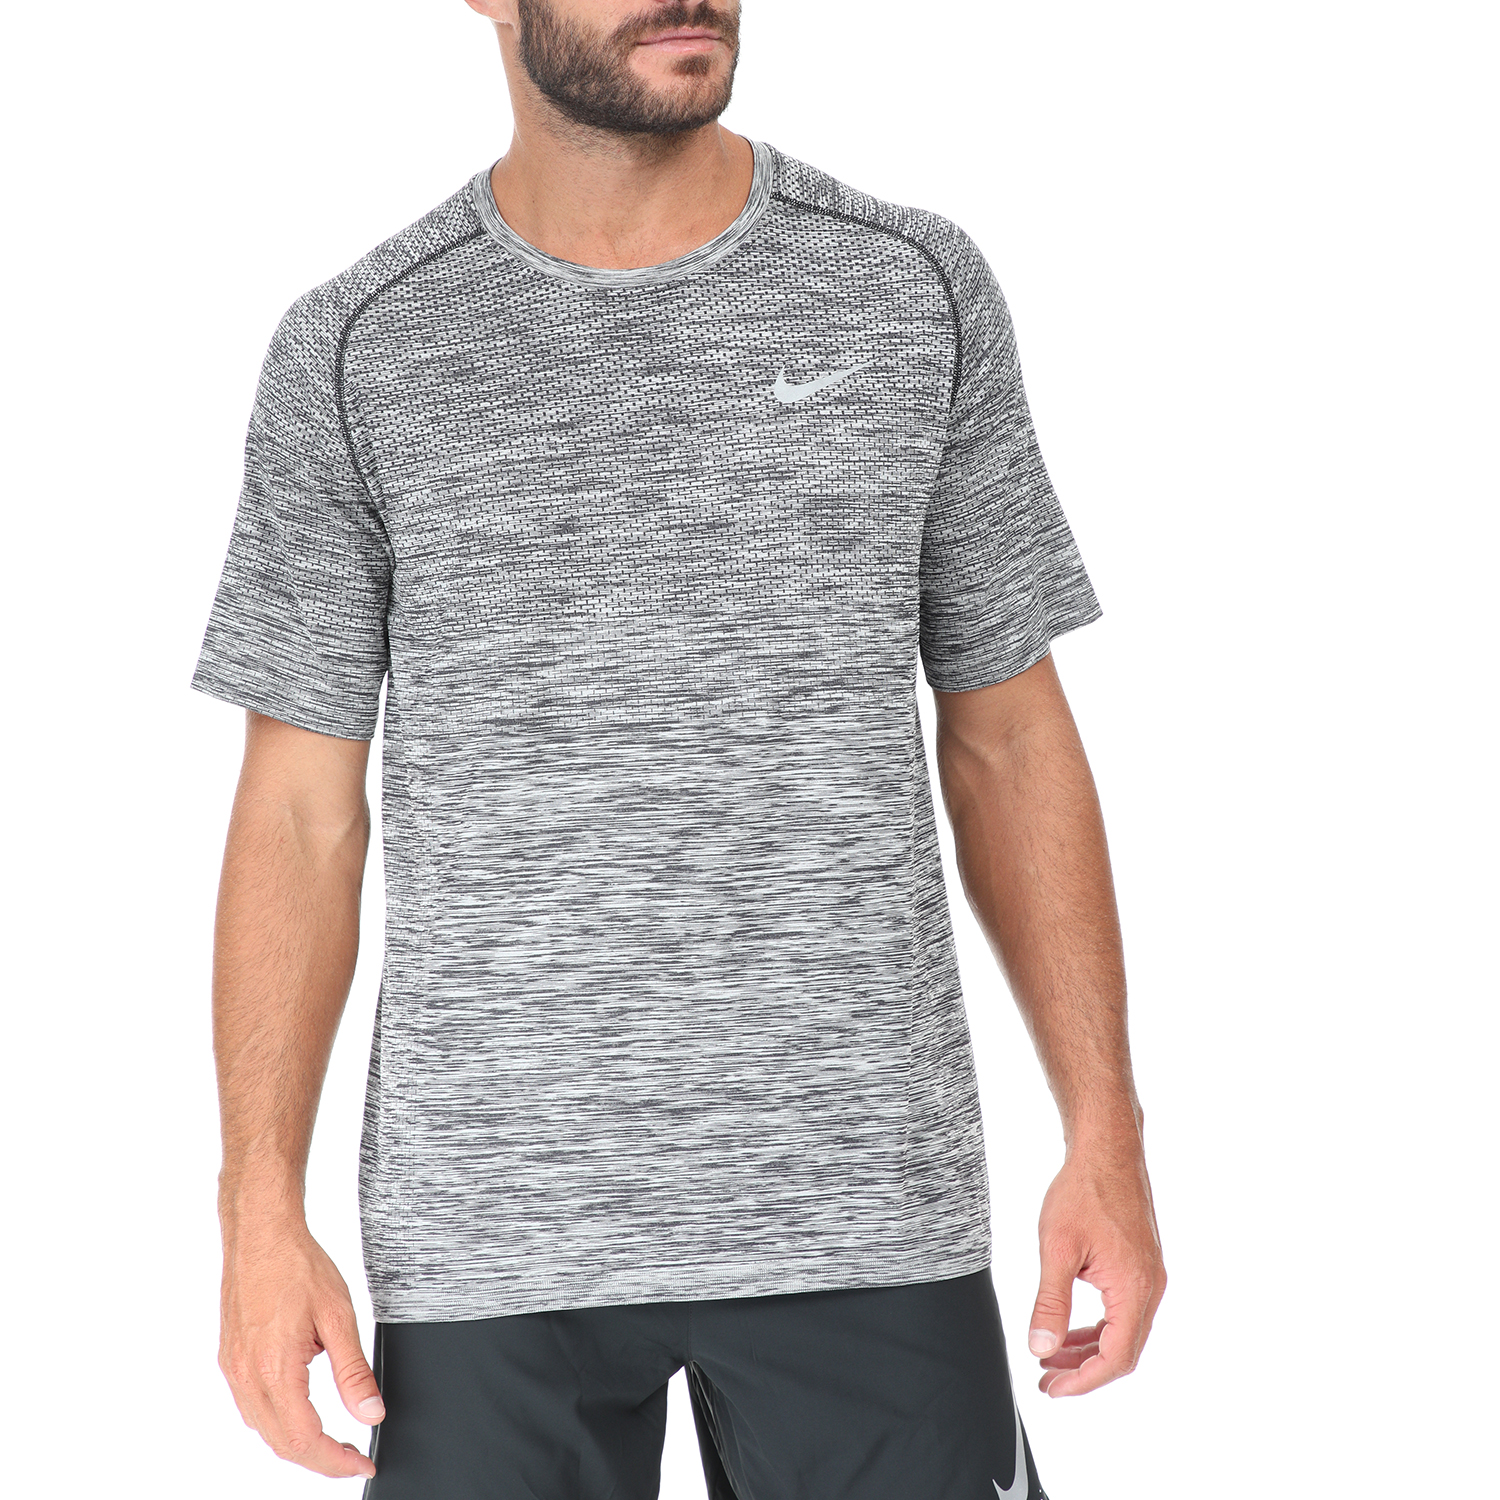 NIKE - Αθλητική κοντομάνικη μπλούζα Nike γκρι Ανδρικά/Ρούχα/Αθλητικά/T-shirt